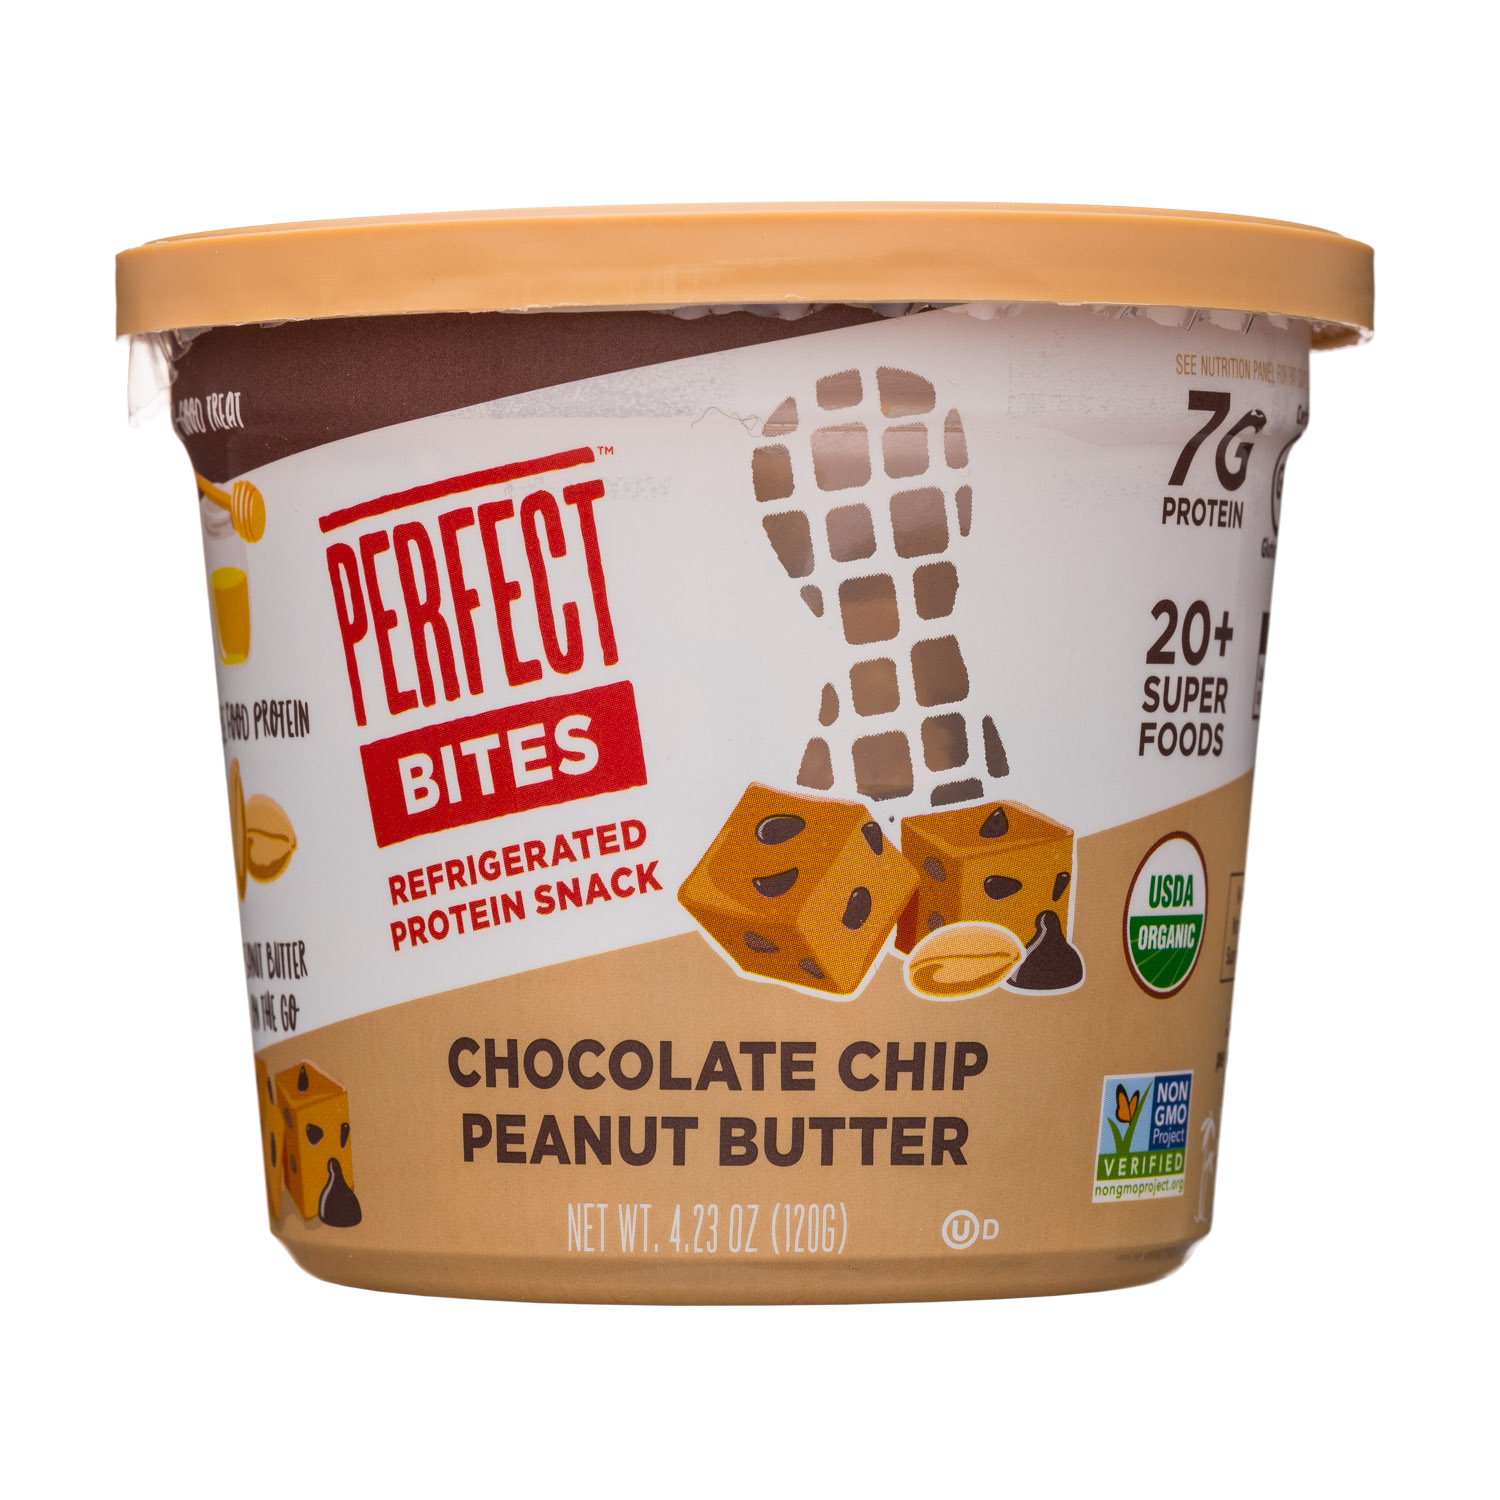 Bites - Chocolate Chip Peanut Butter